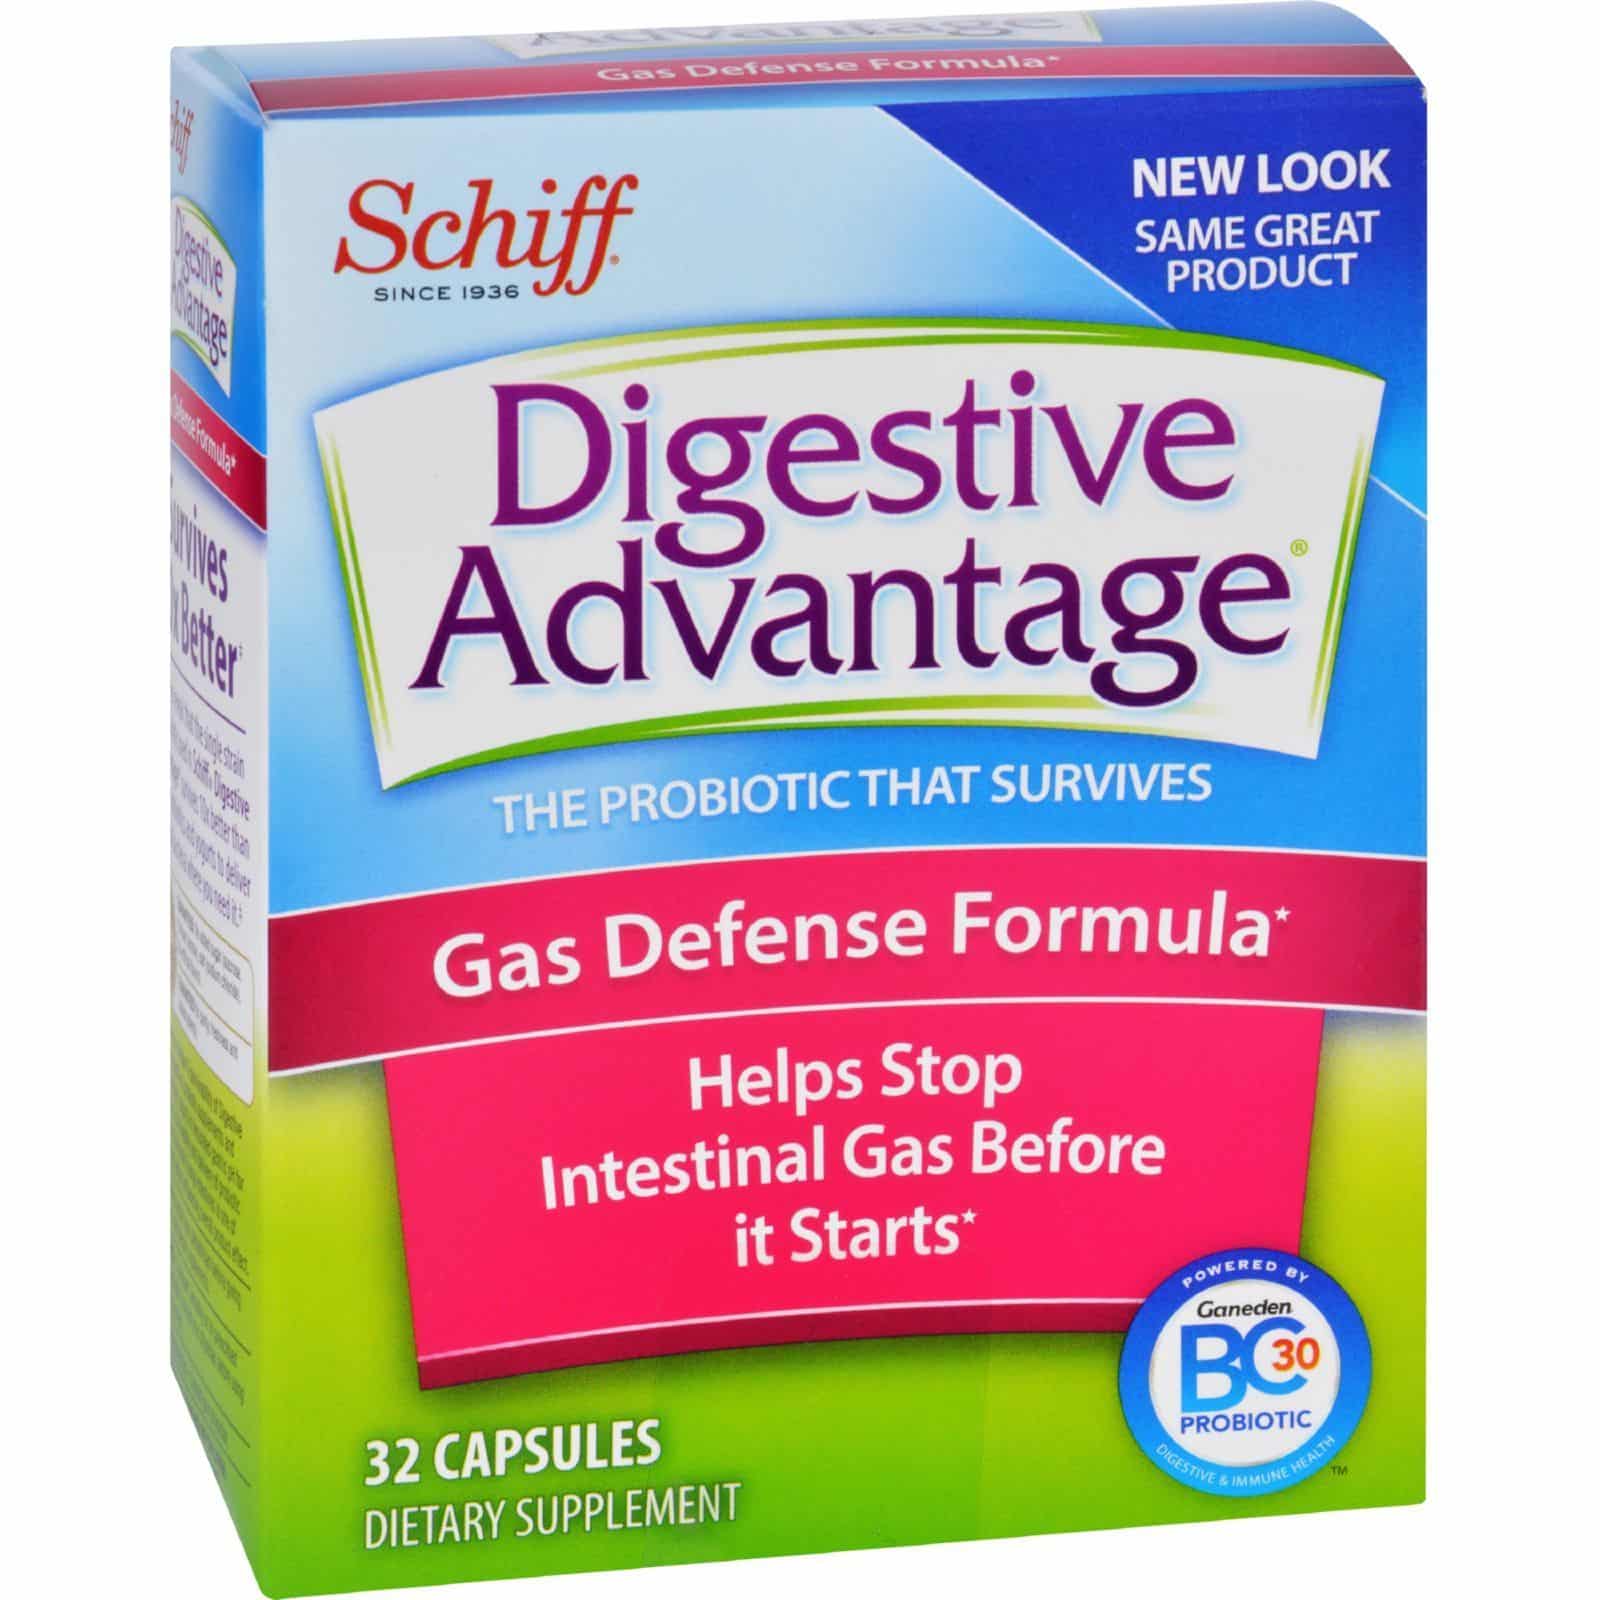 Schiff Gas Defense Formula